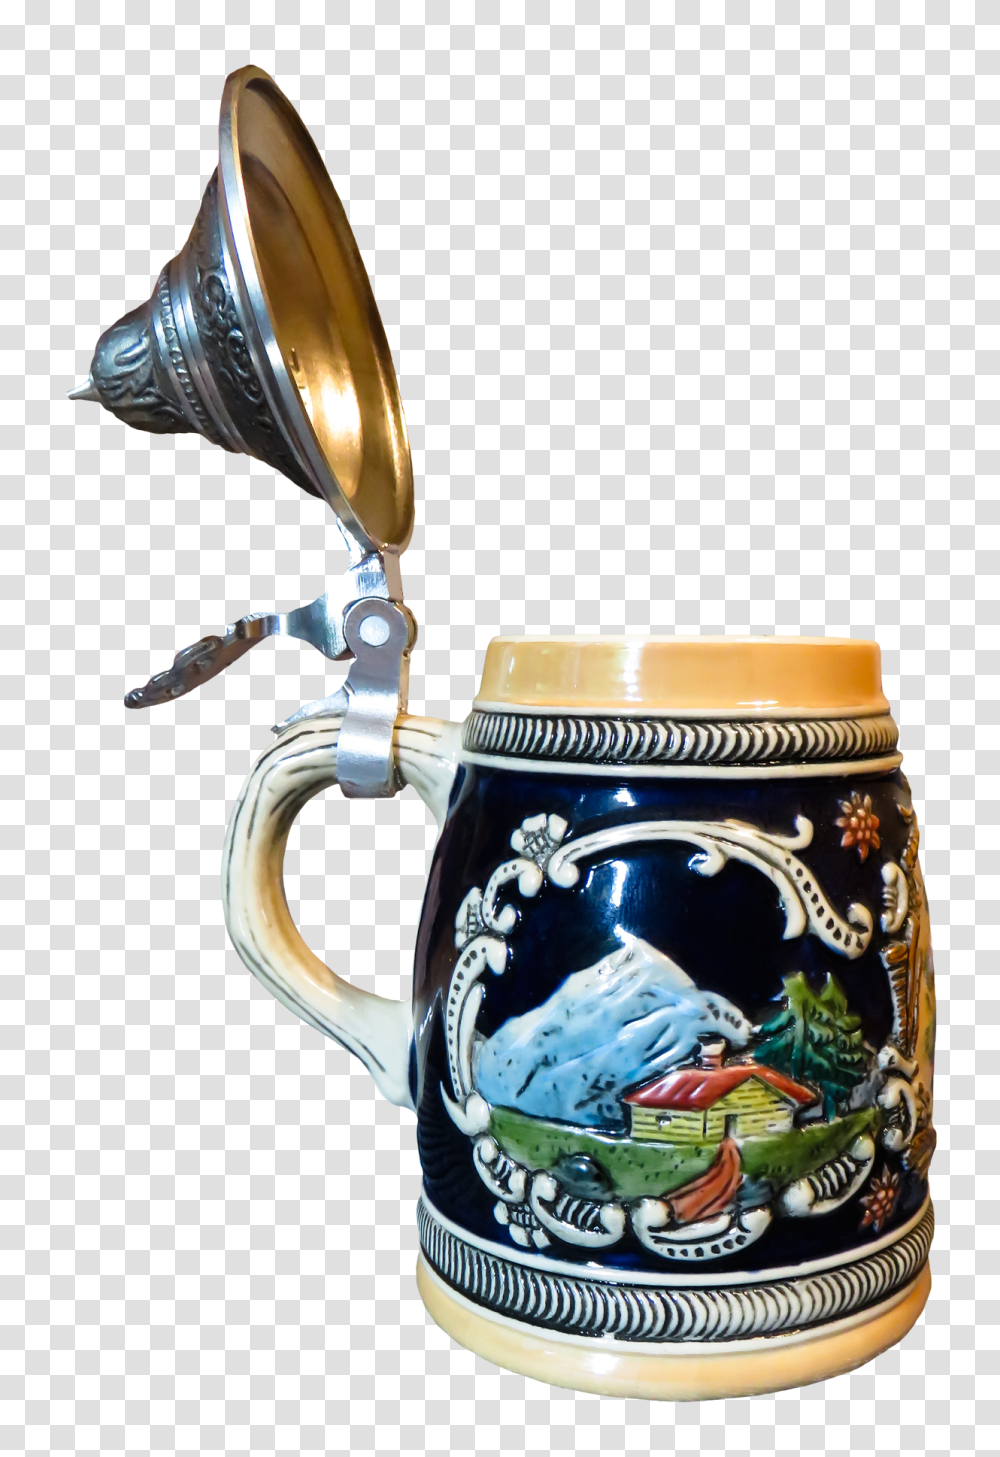 Beer Mug Image, Stein, Jug, Cup Transparent Png